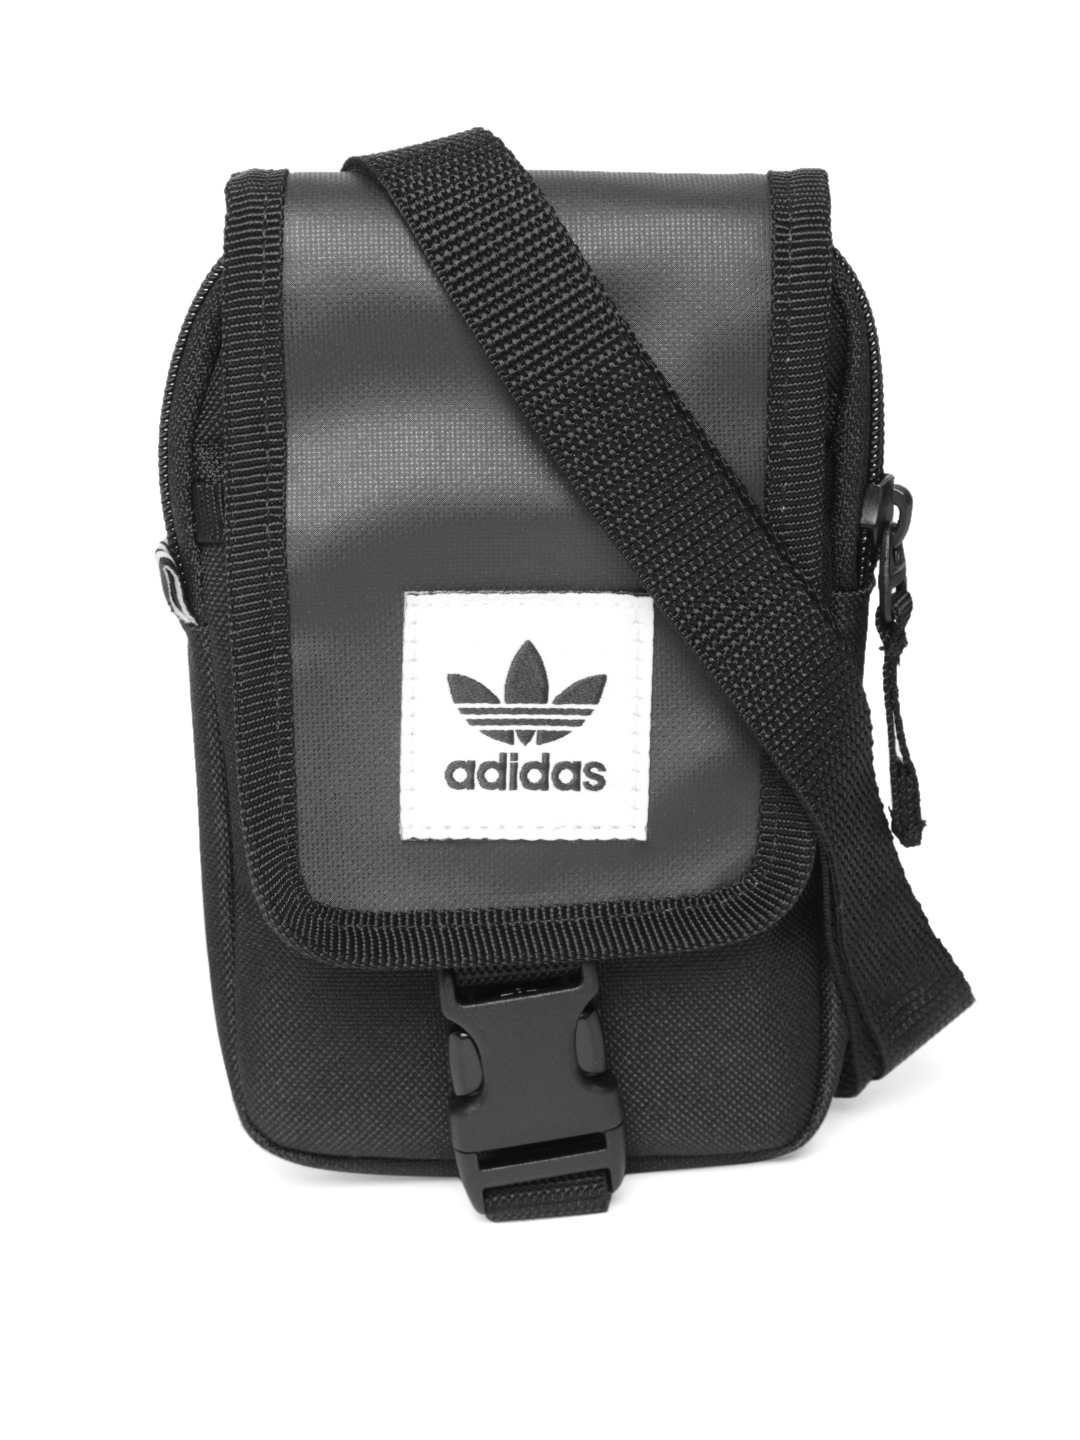 Adidas Messenger Bag - Etsy UK